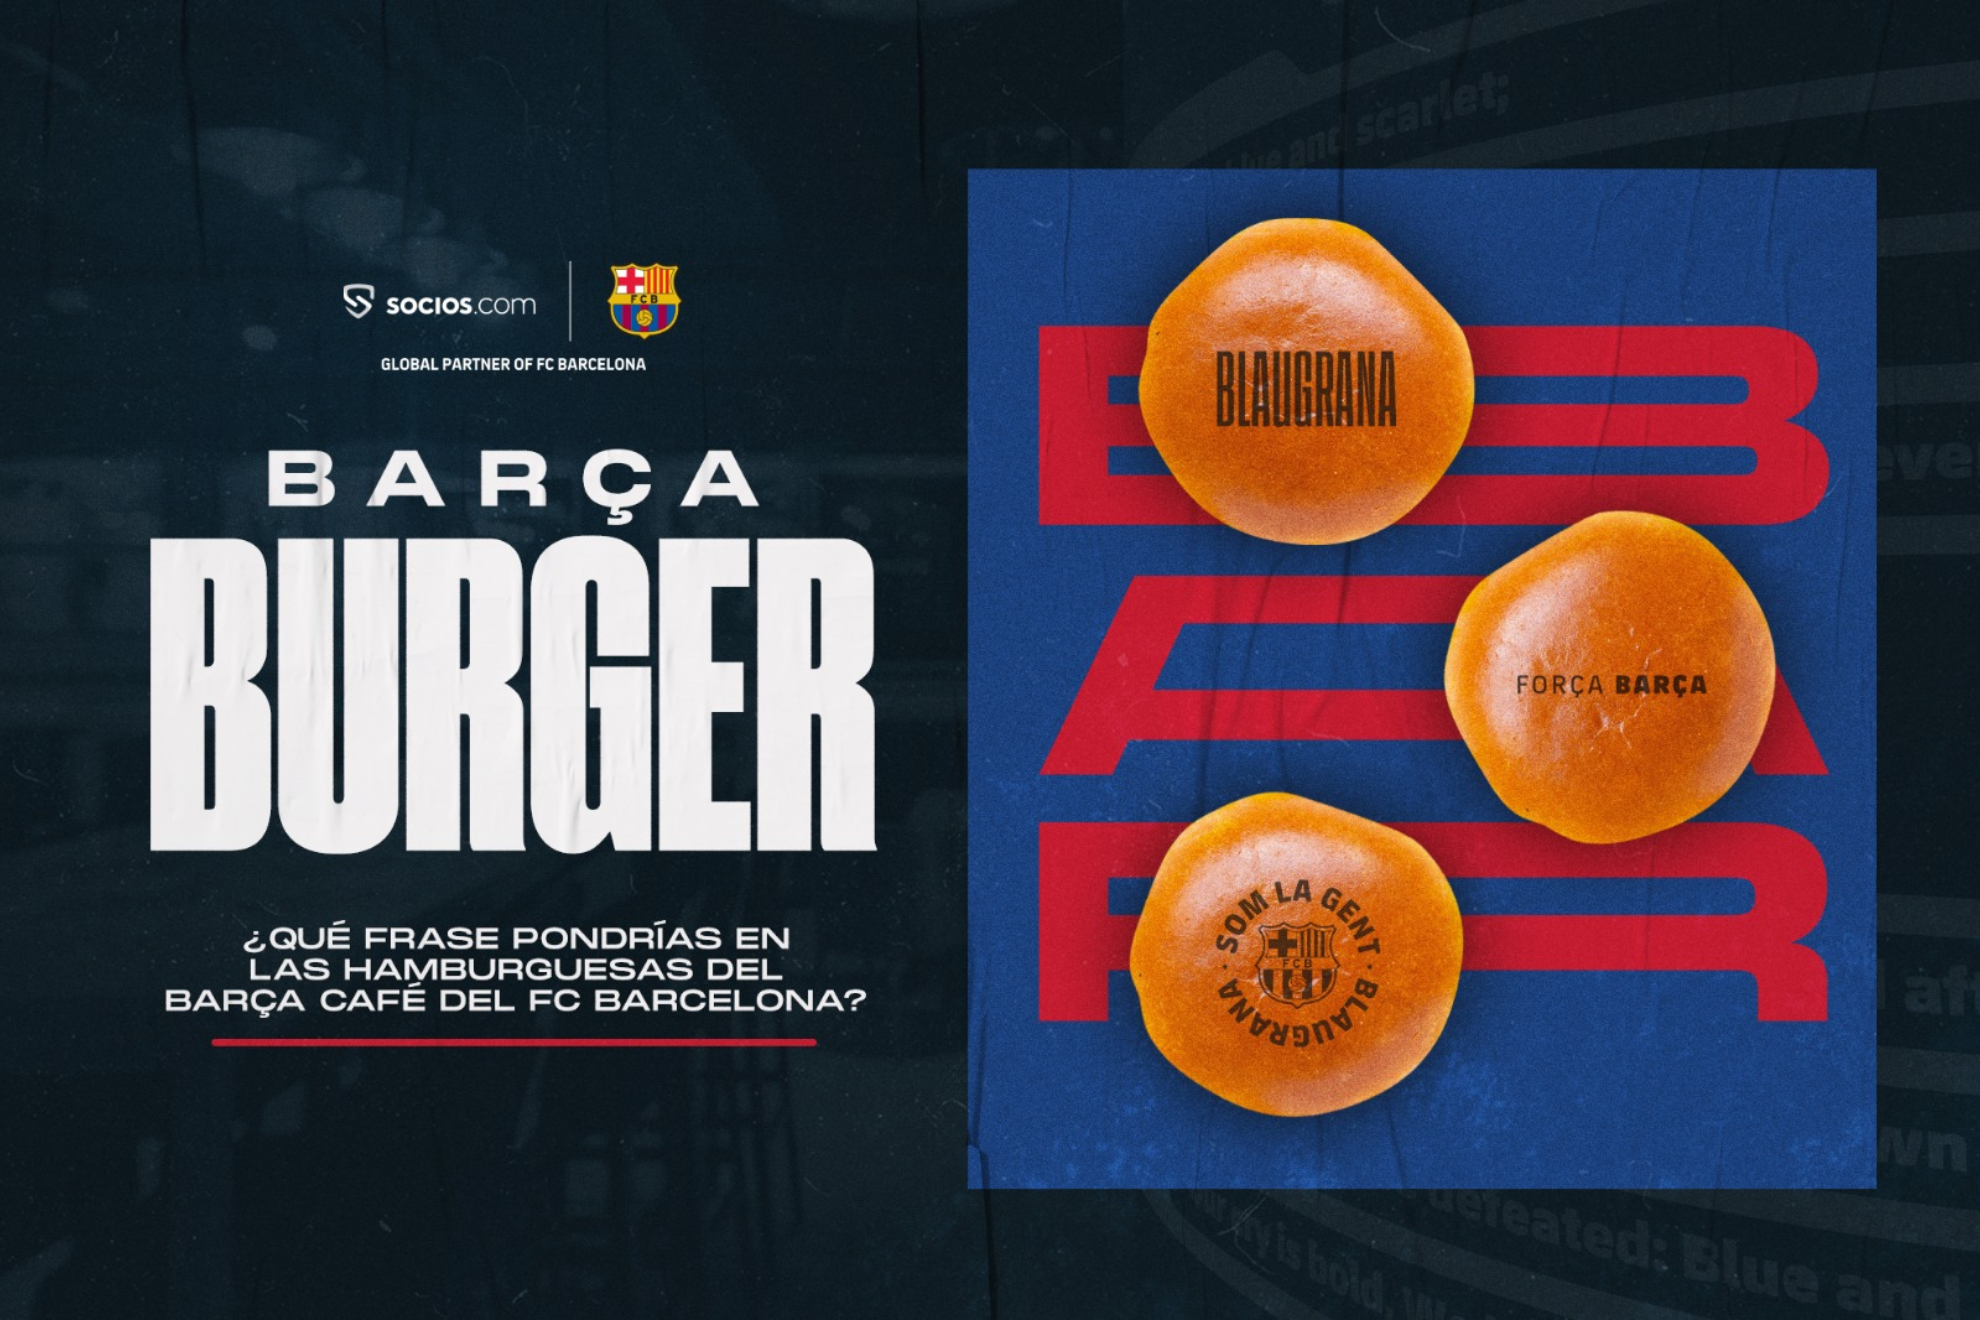 The Barcelona burger.